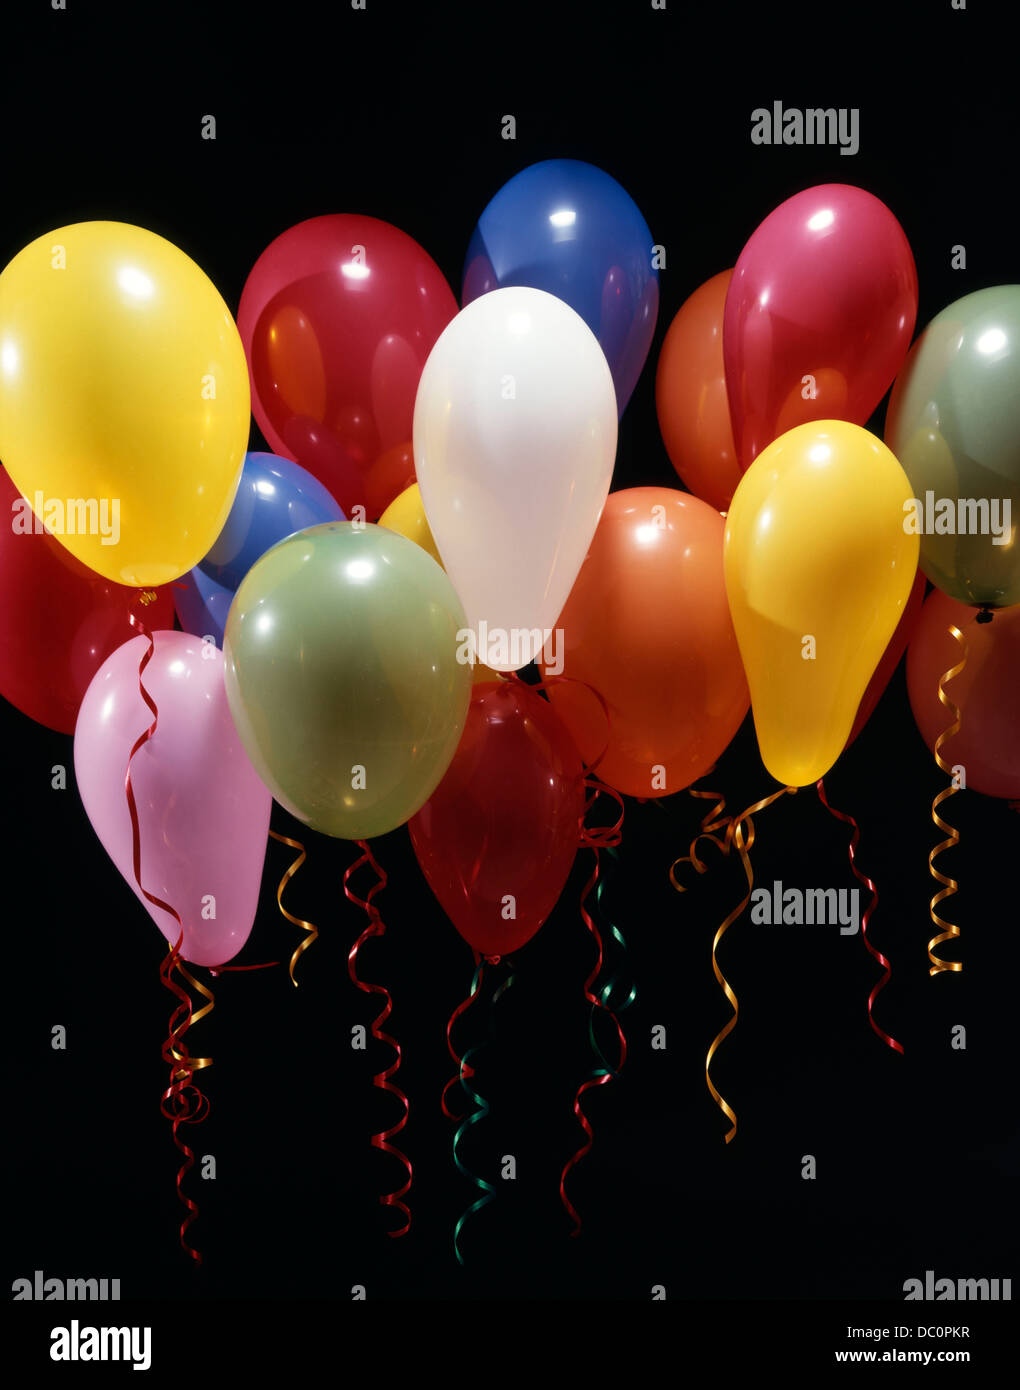 Arco iris colorido arreglo de globos atados con cintas cinta trenzado  Celebración de fiestas decoración flotante inflados Fotografía de stock -  Alamy